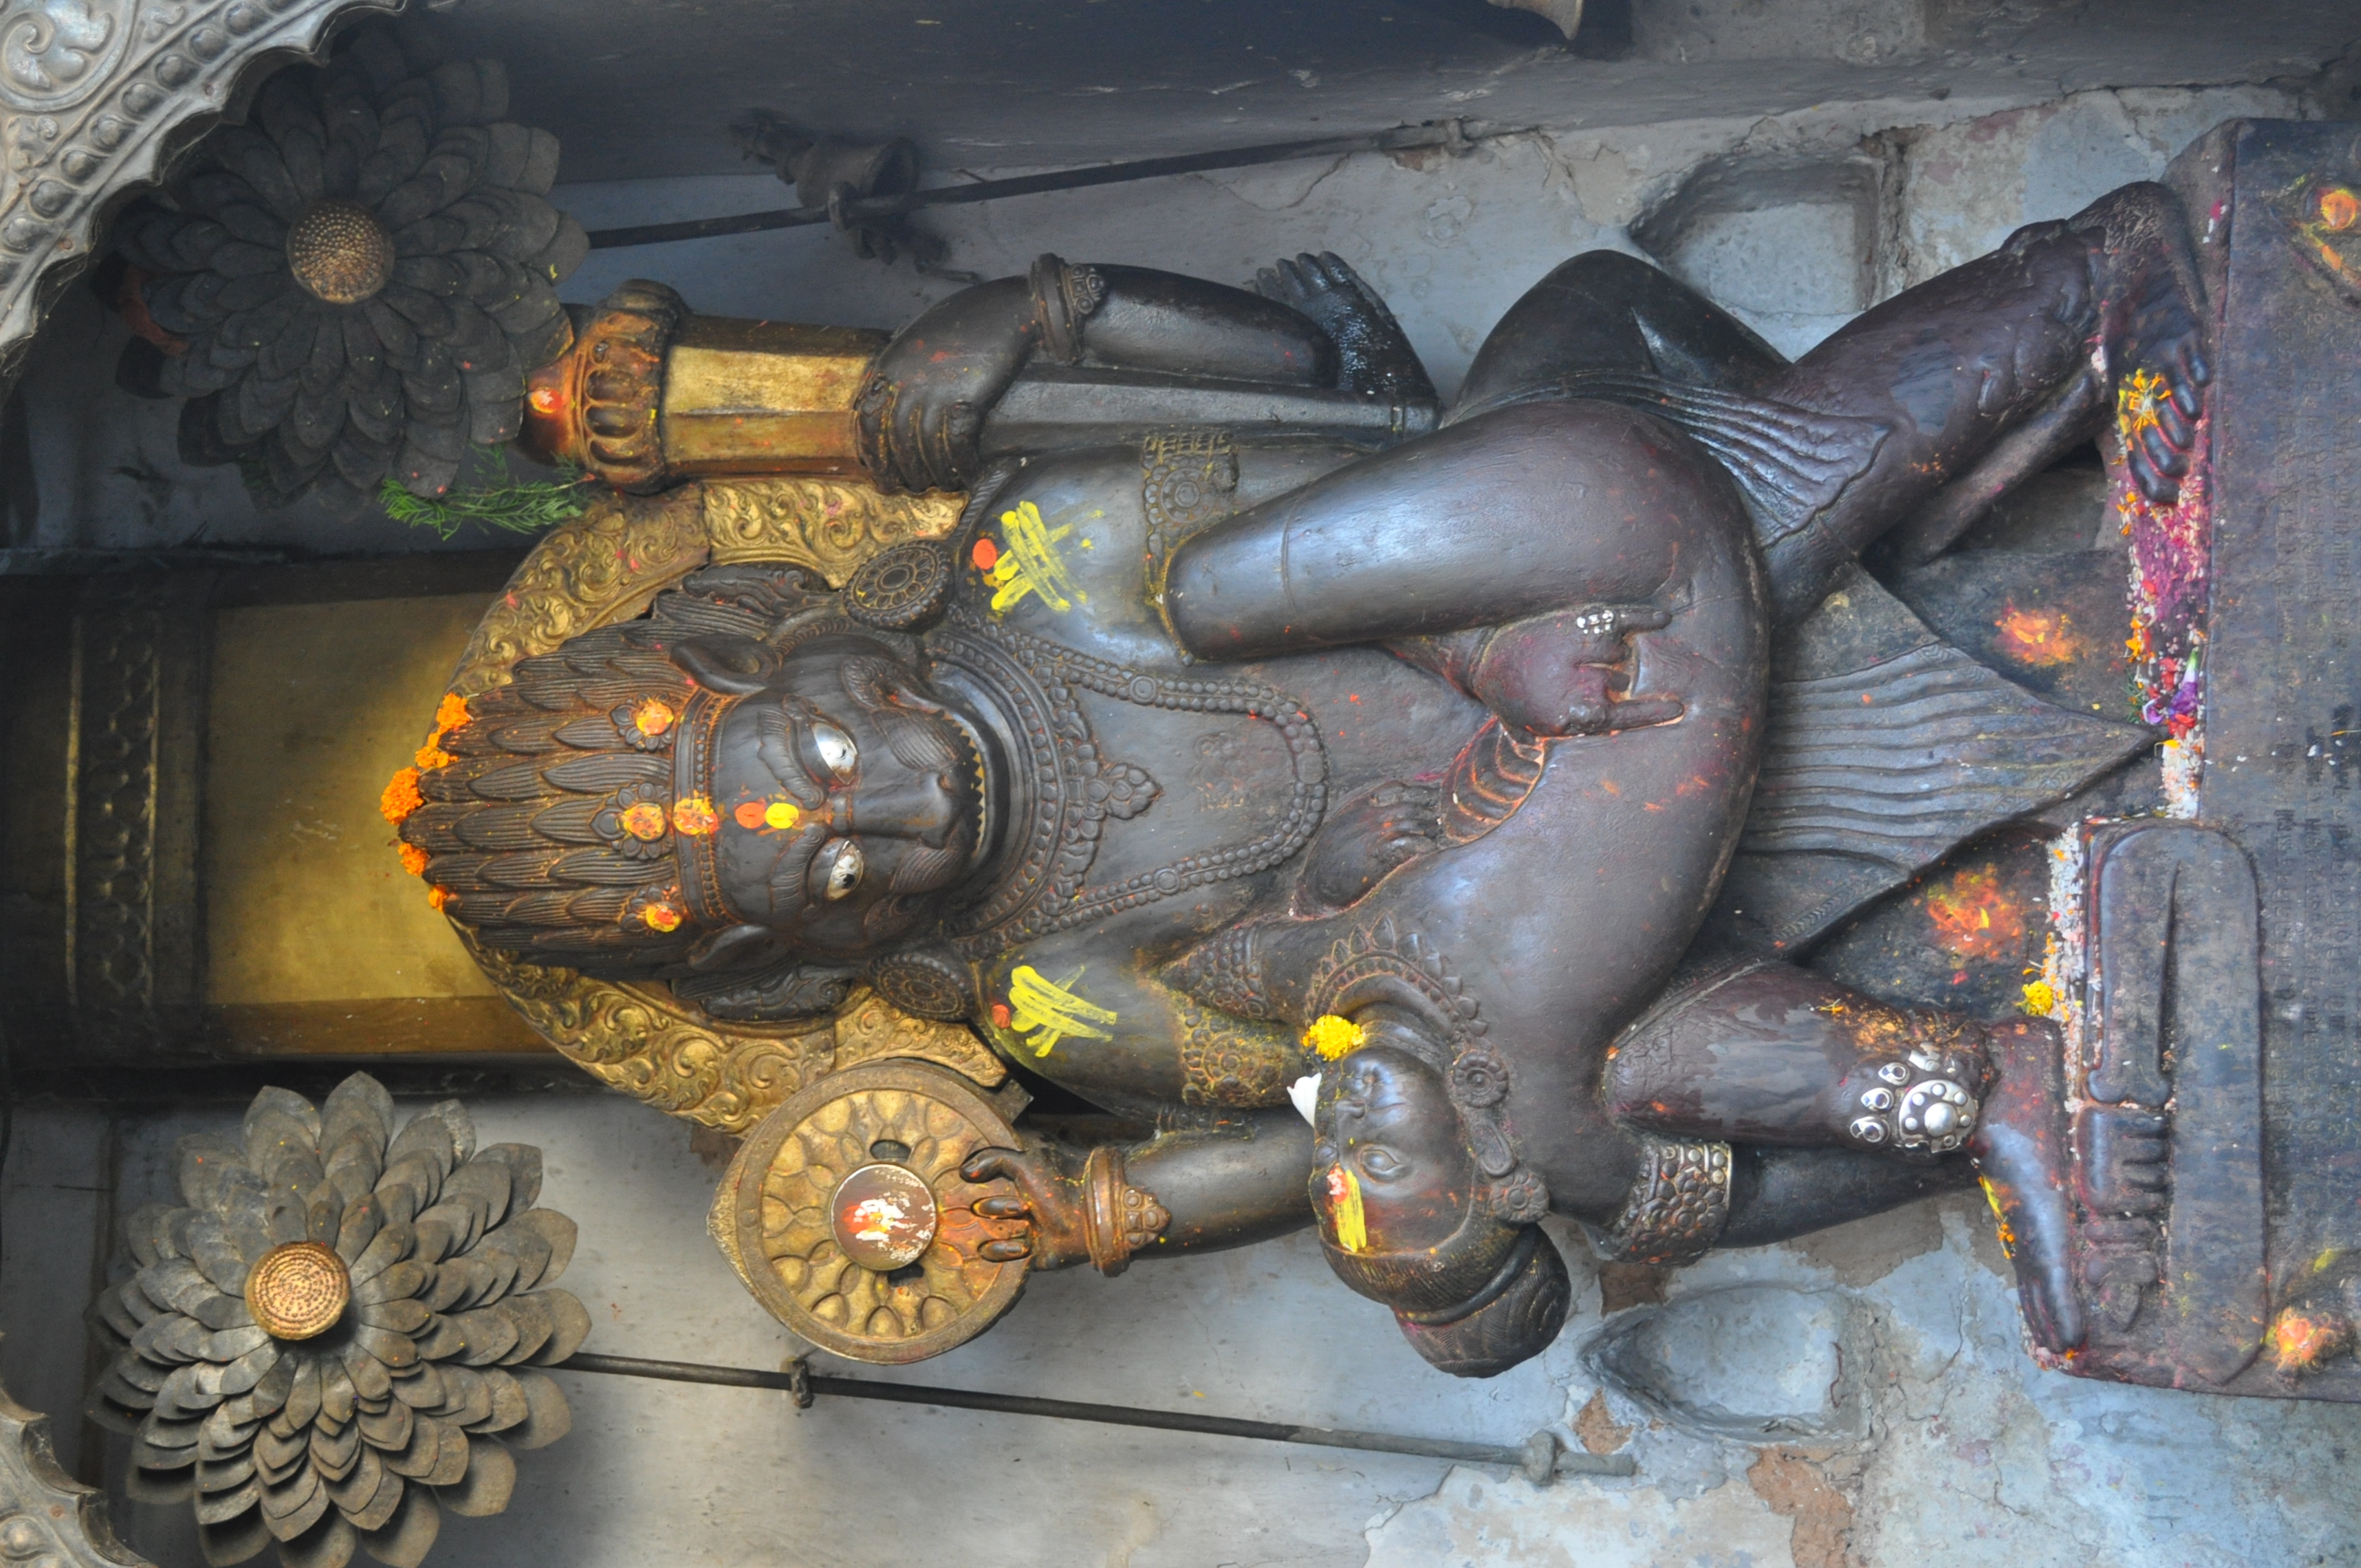 Creative Commons image from https://commons.wikimedia.org/wiki/File:Lord_Narasimha_killing_demon_hiranakashyap_in_his_lap.jpg